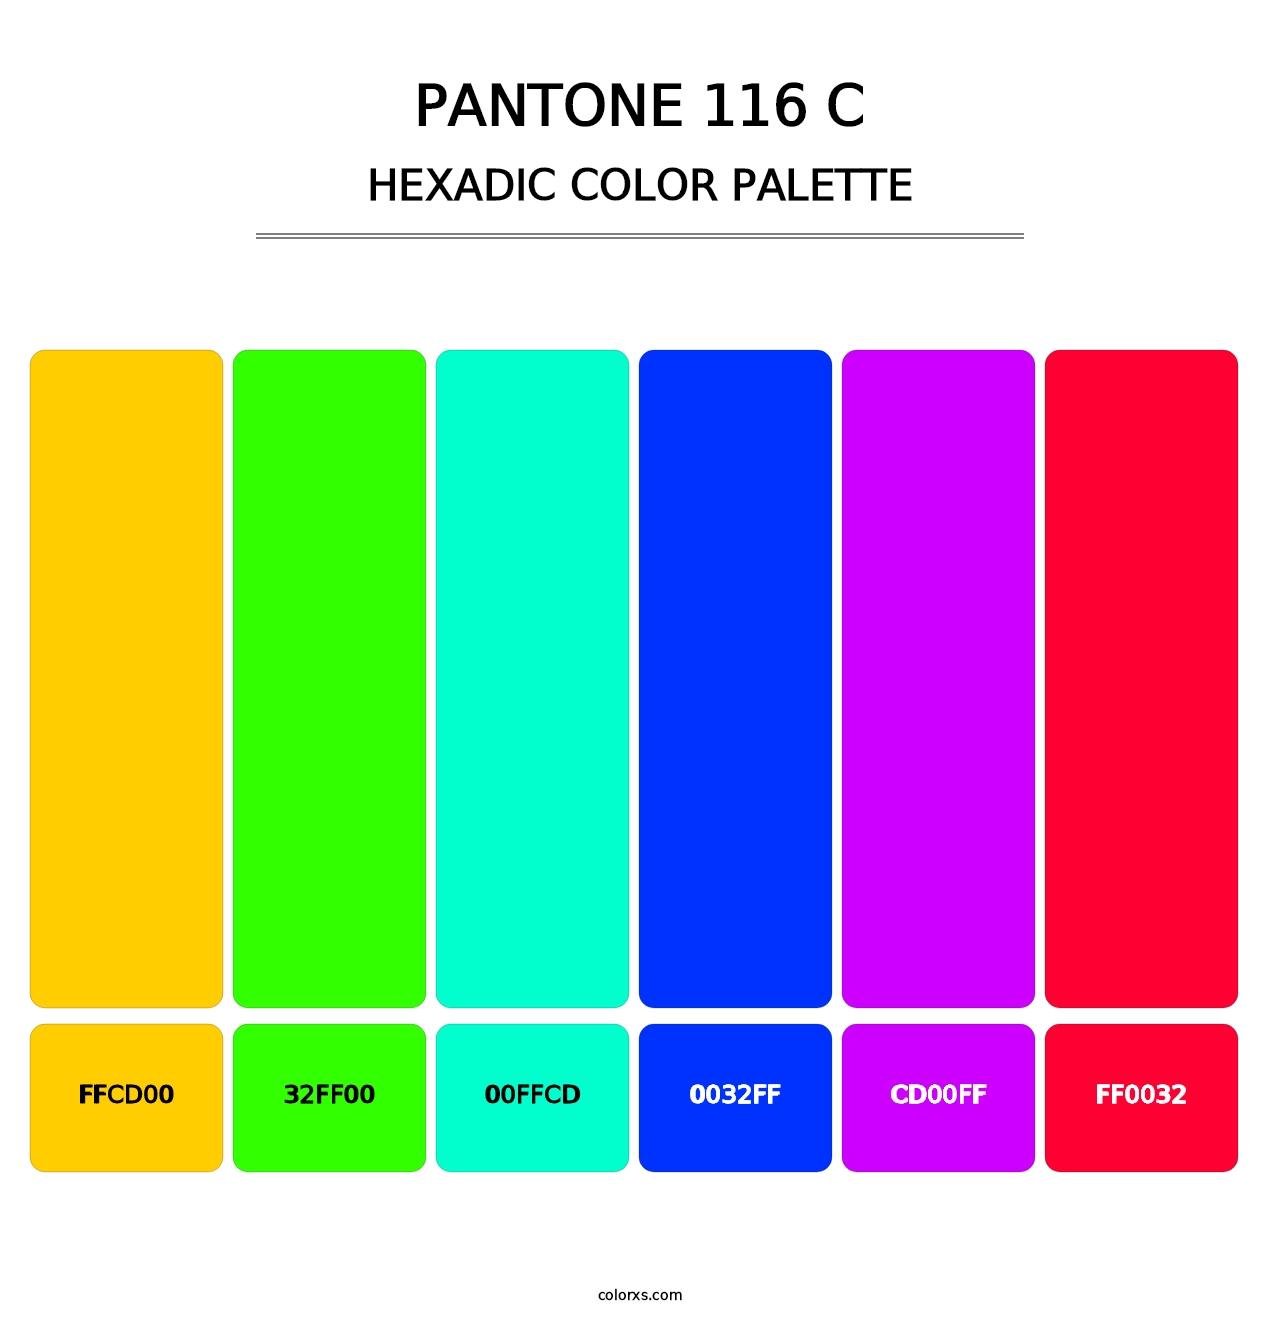 PANTONE 116 C - Hexadic Color Palette